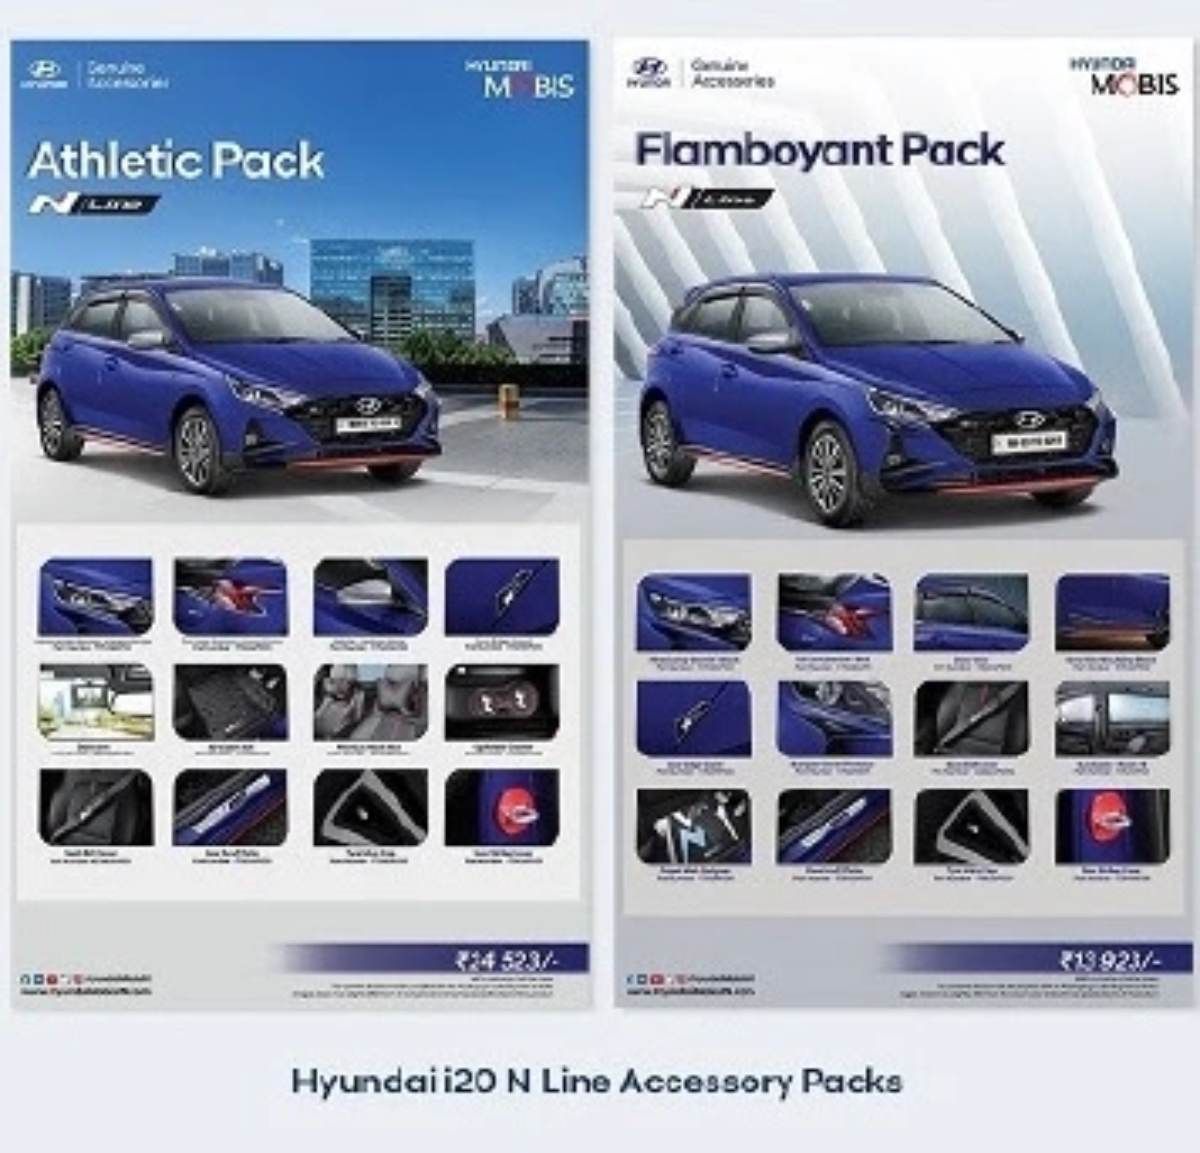 Hyundai i20 N Line accessories